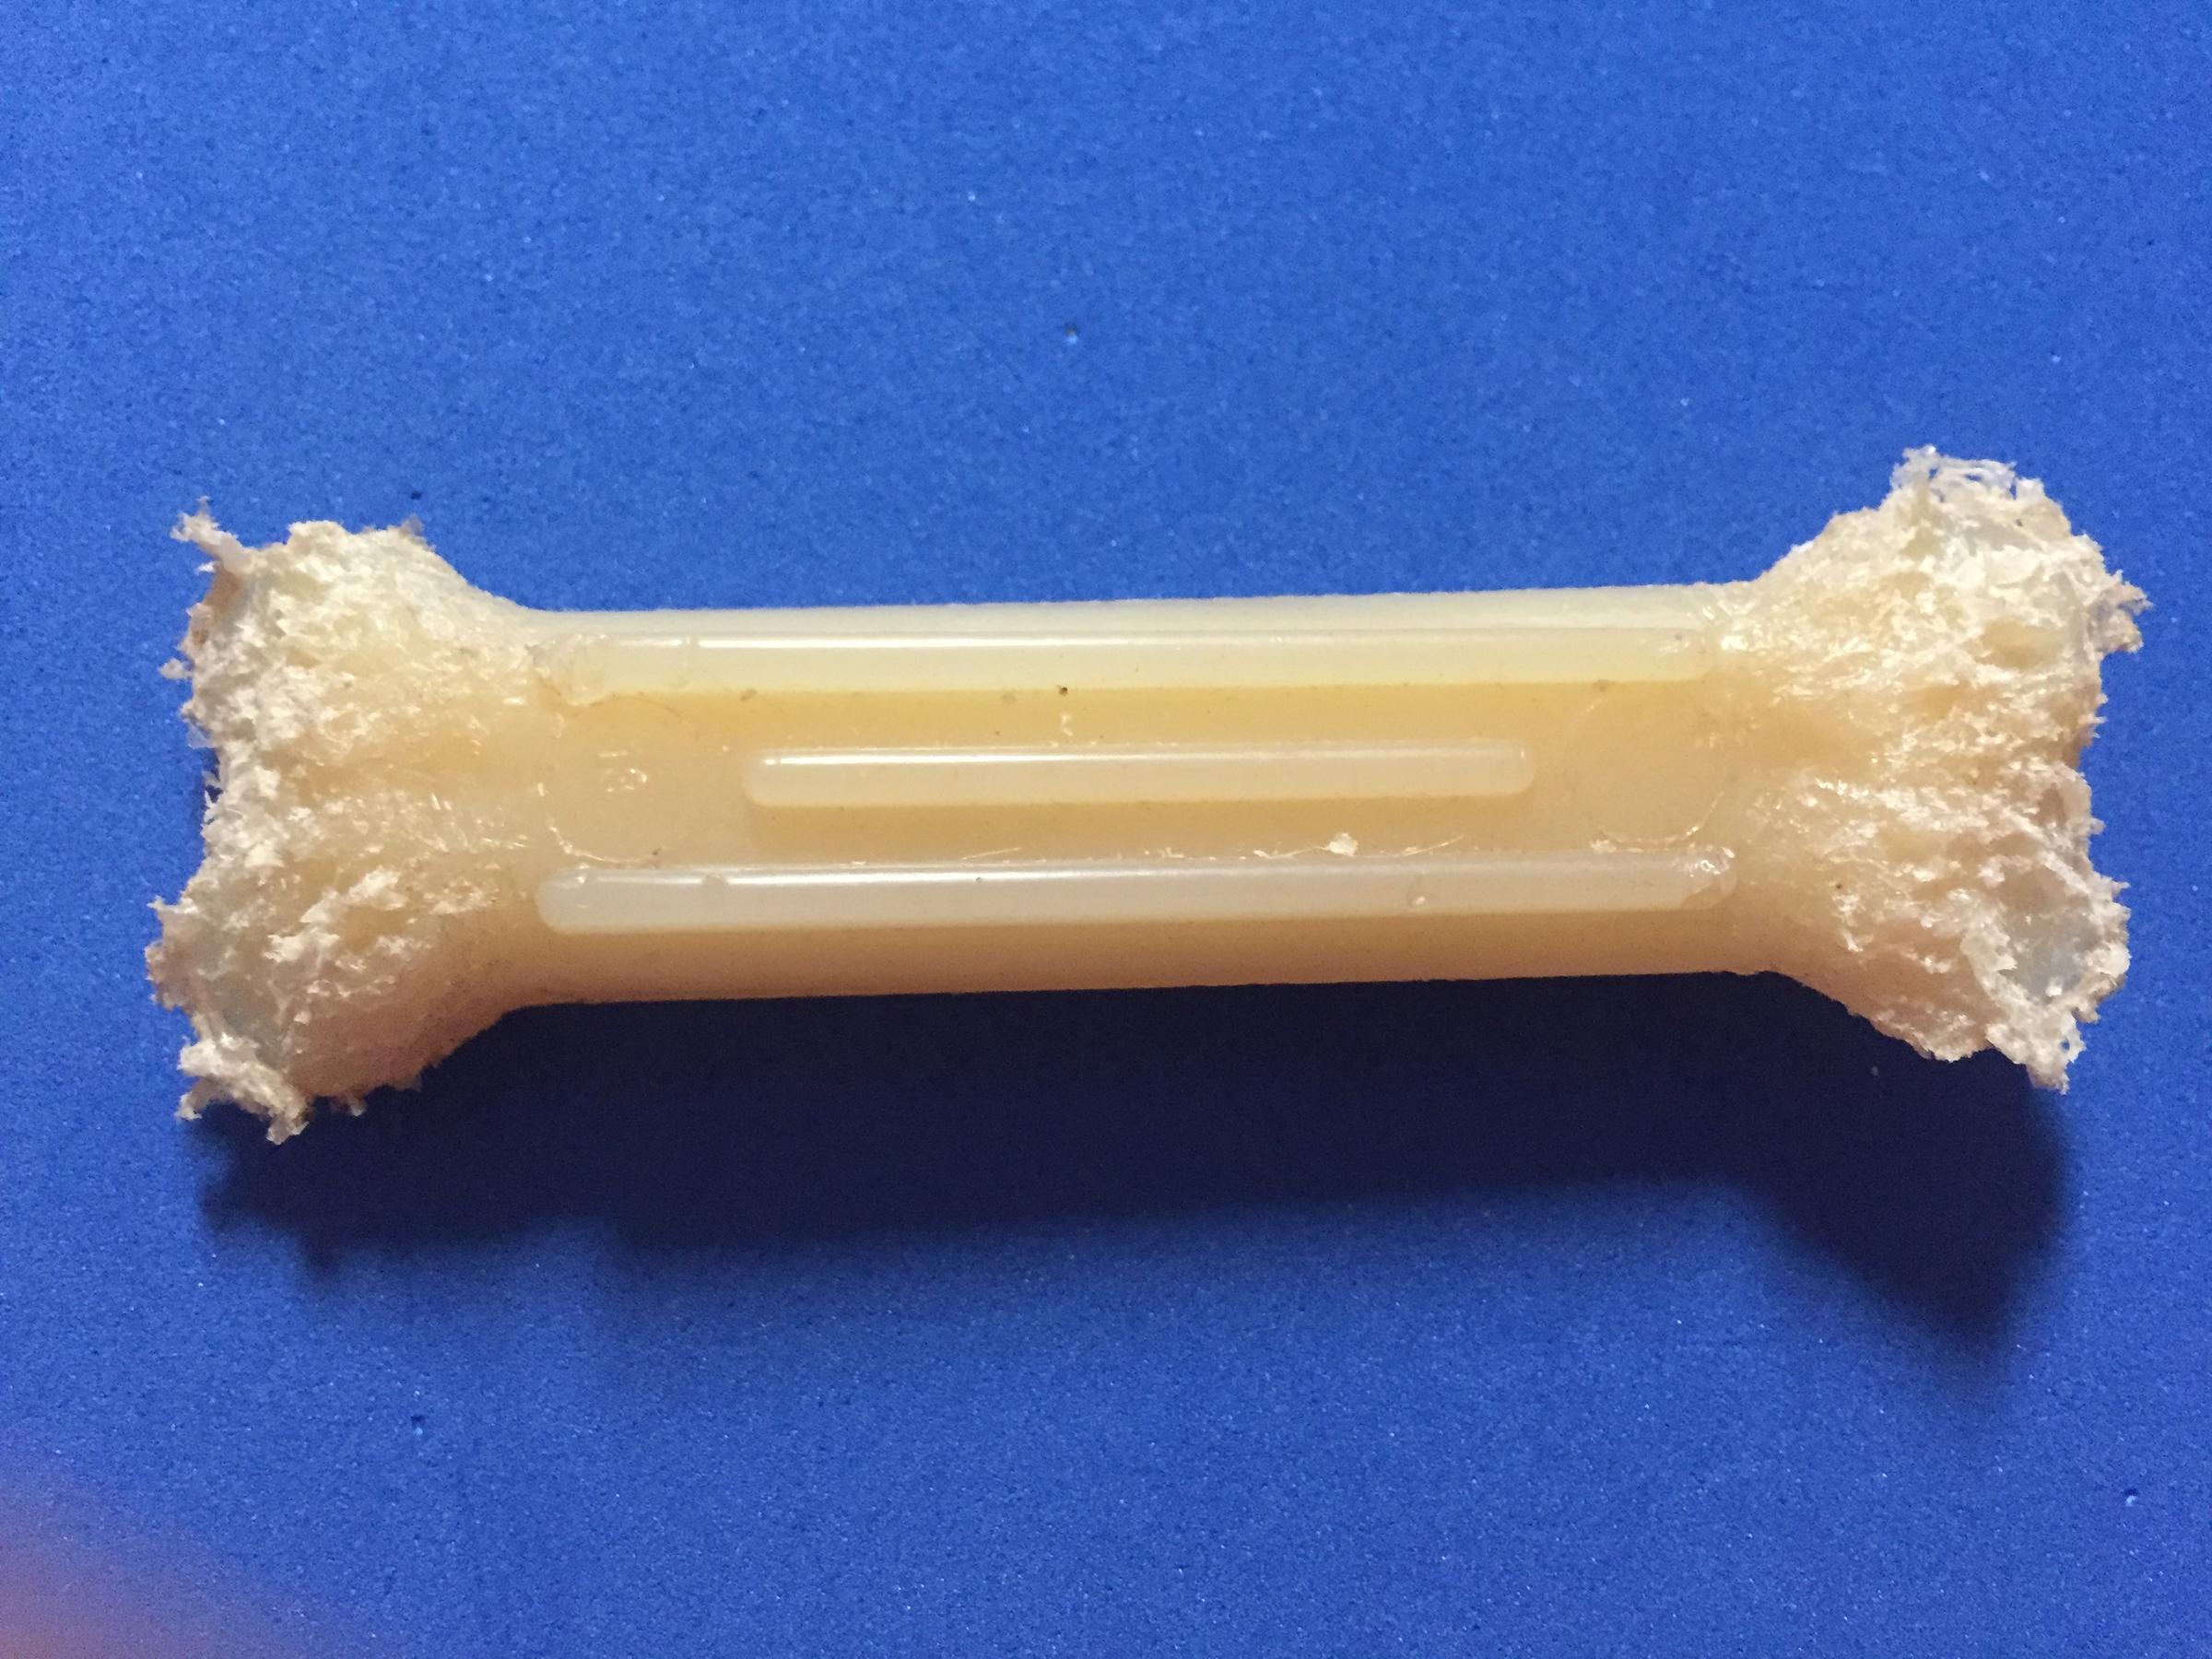 hard plastic dog bone